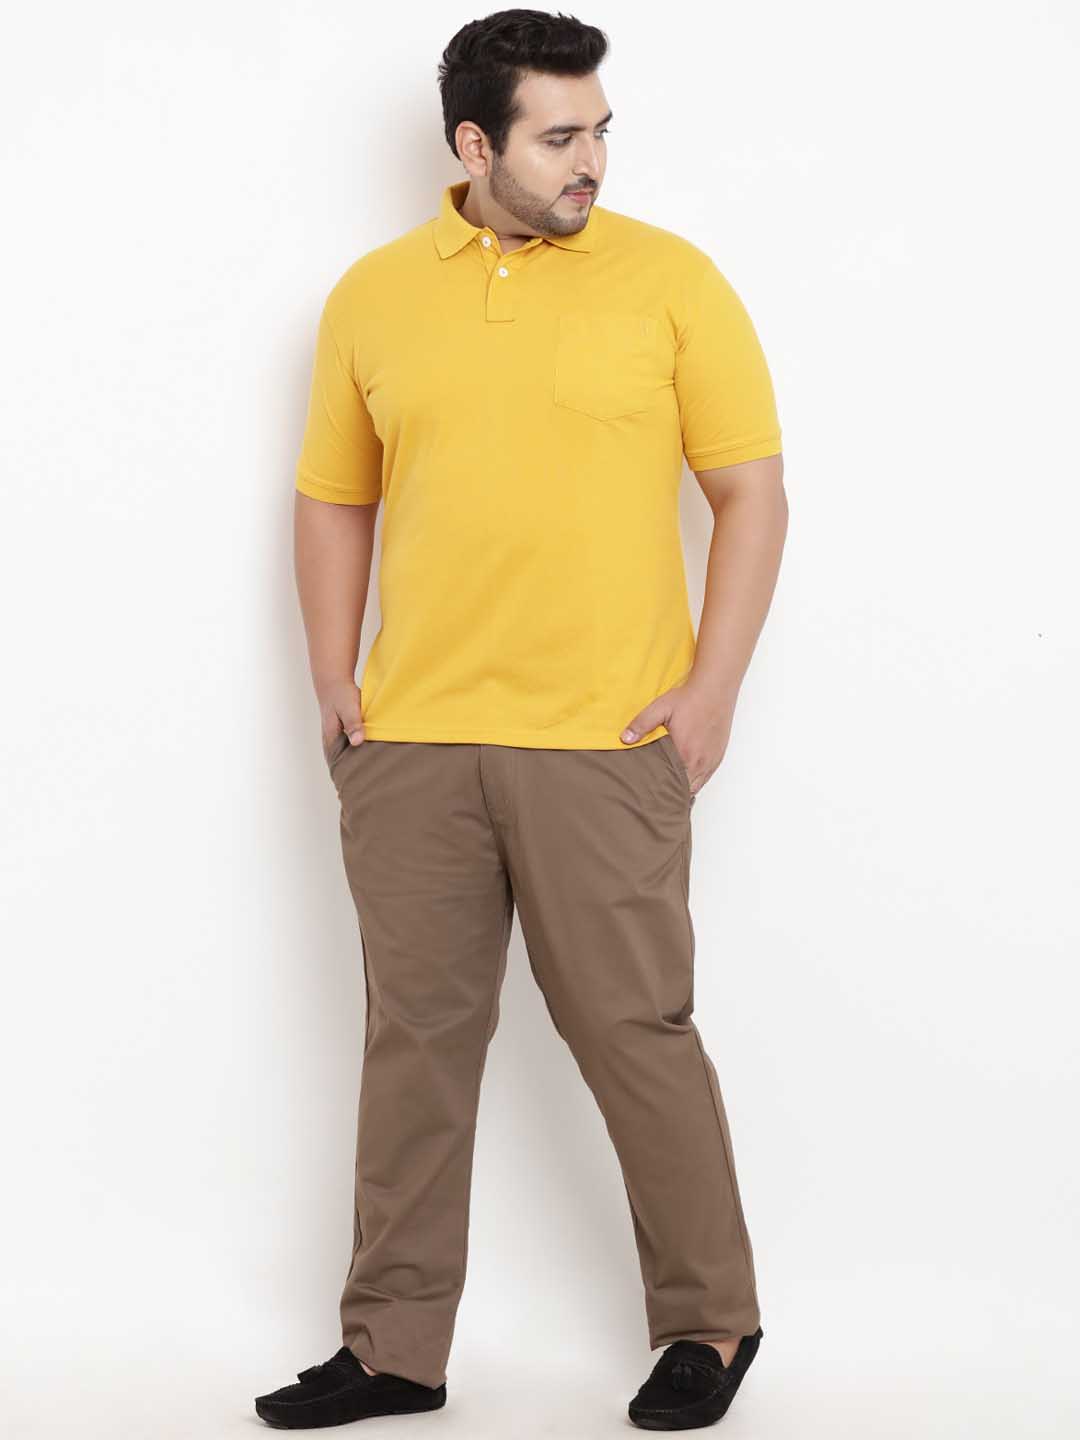 John Pride Yellow T-Shirt